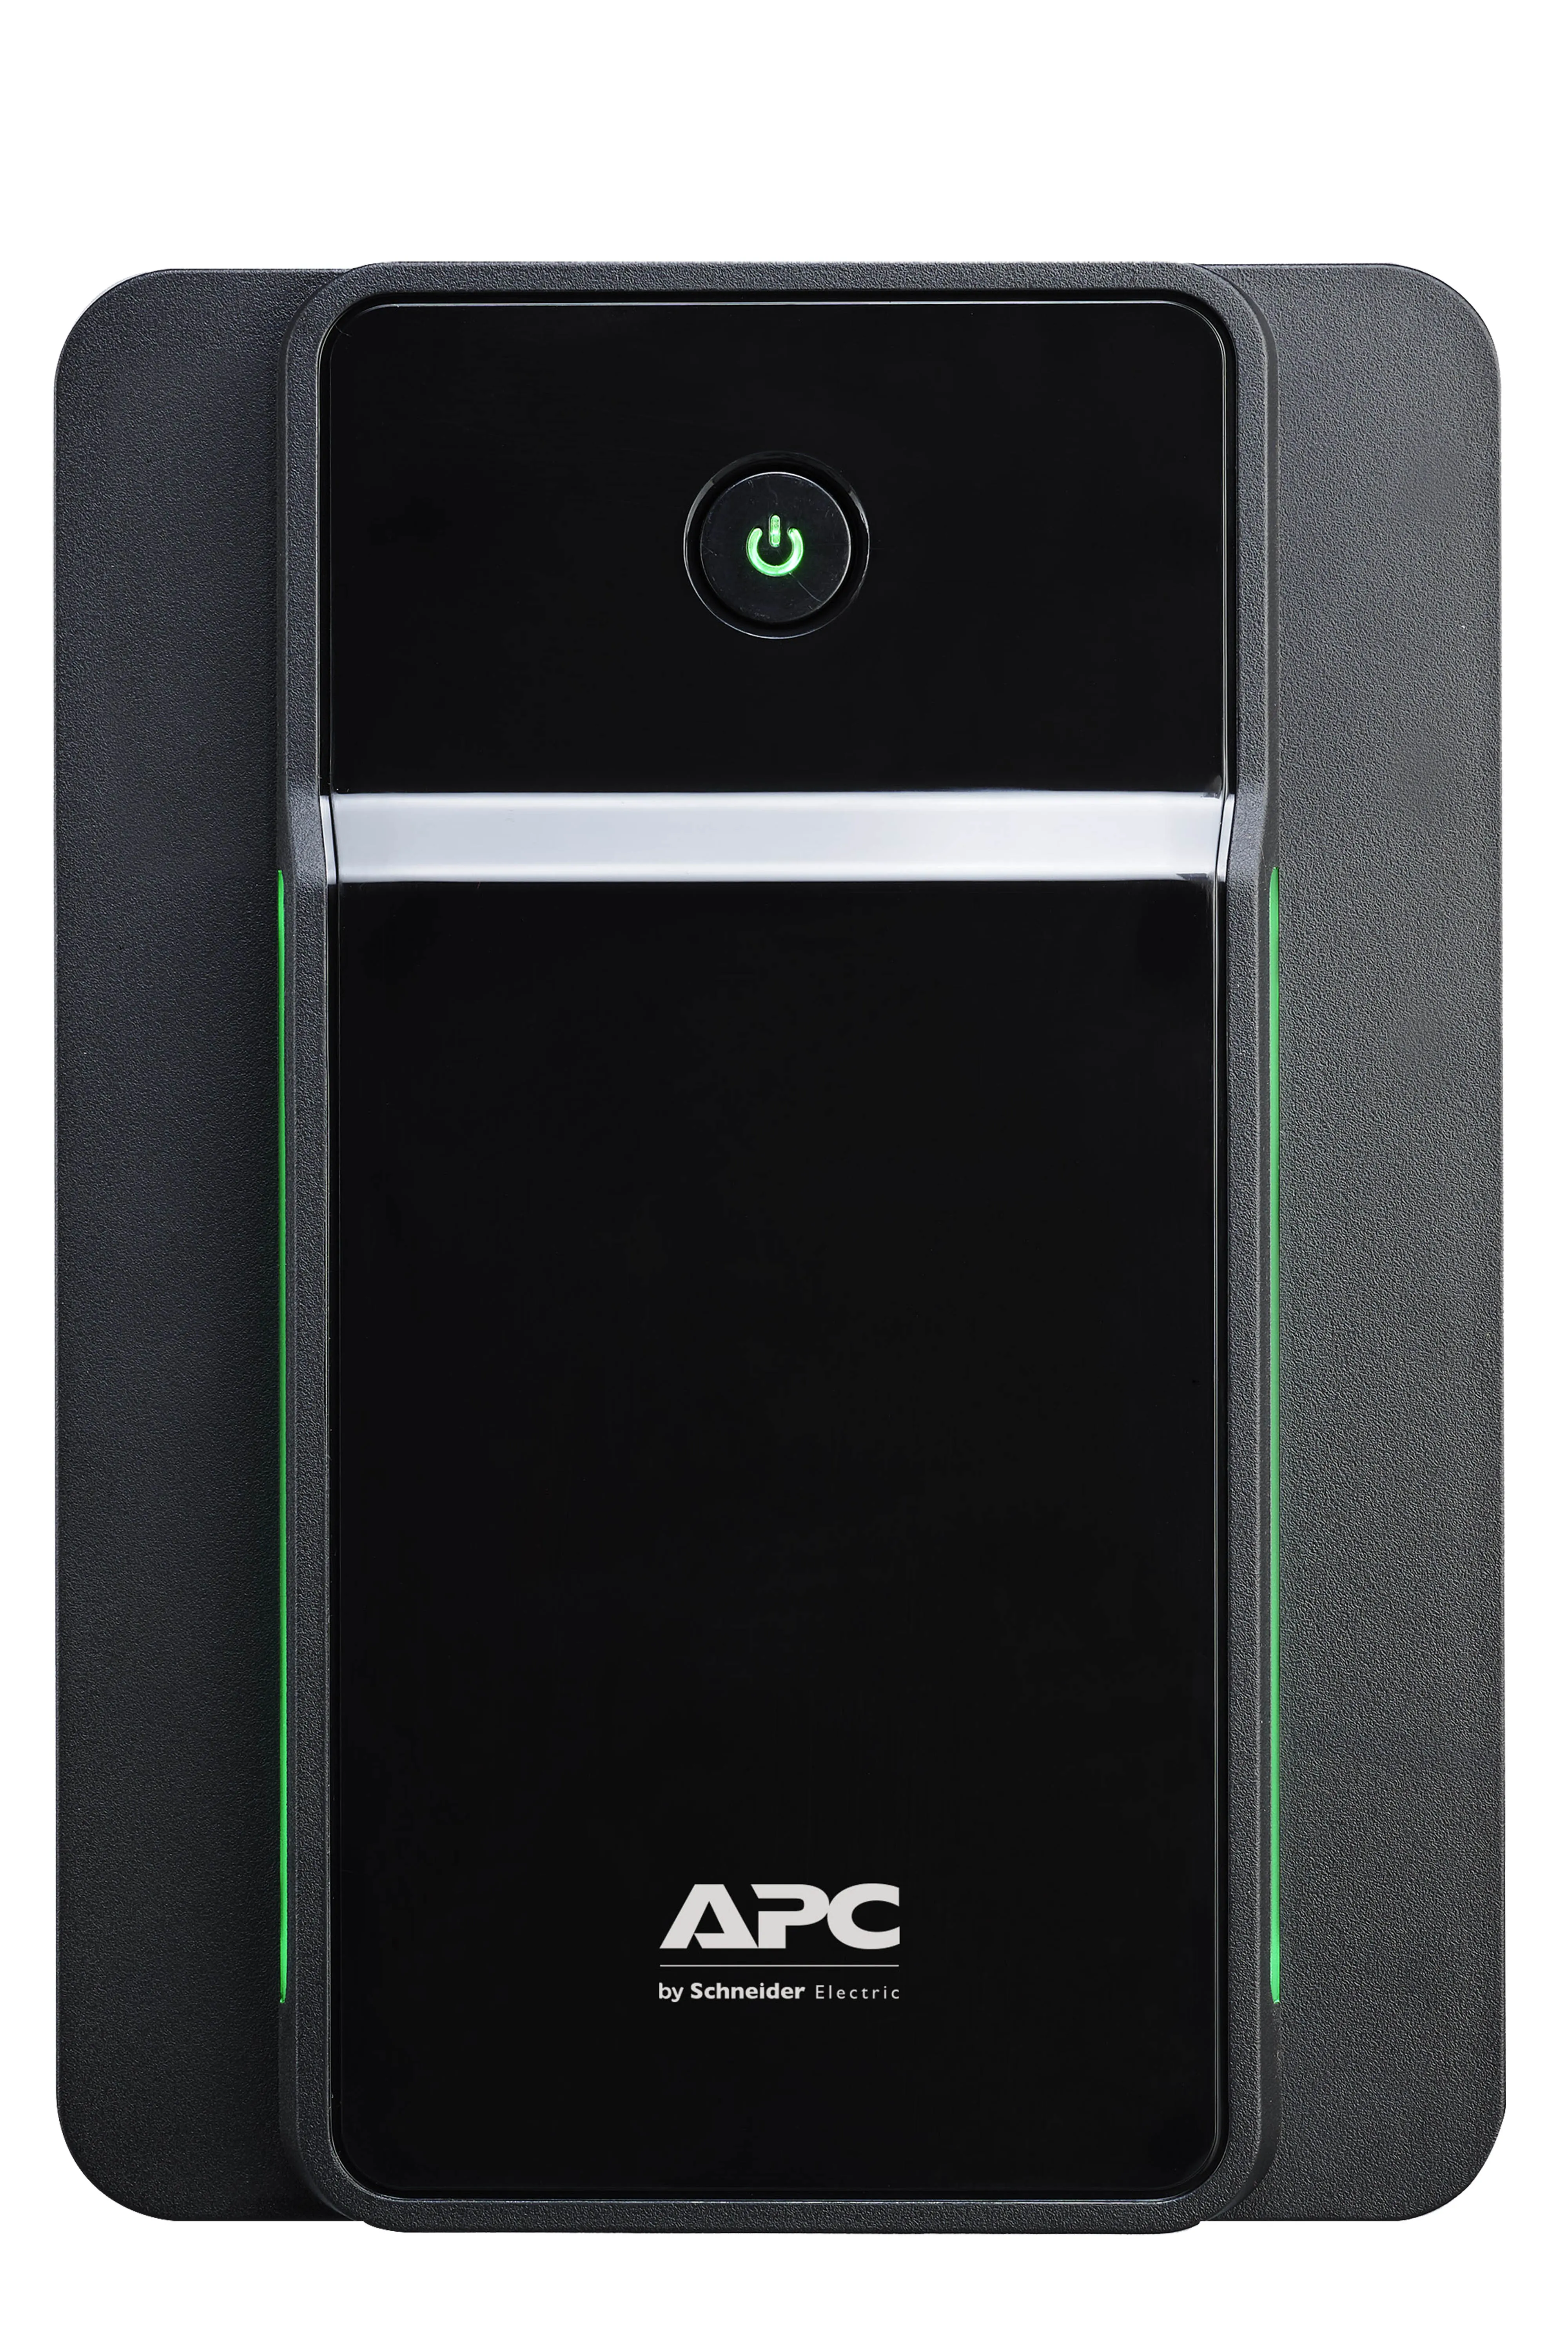 Vente APC Back-UPS 1200VA 230V AVR IEC Sockets APC au meilleur prix - visuel 10